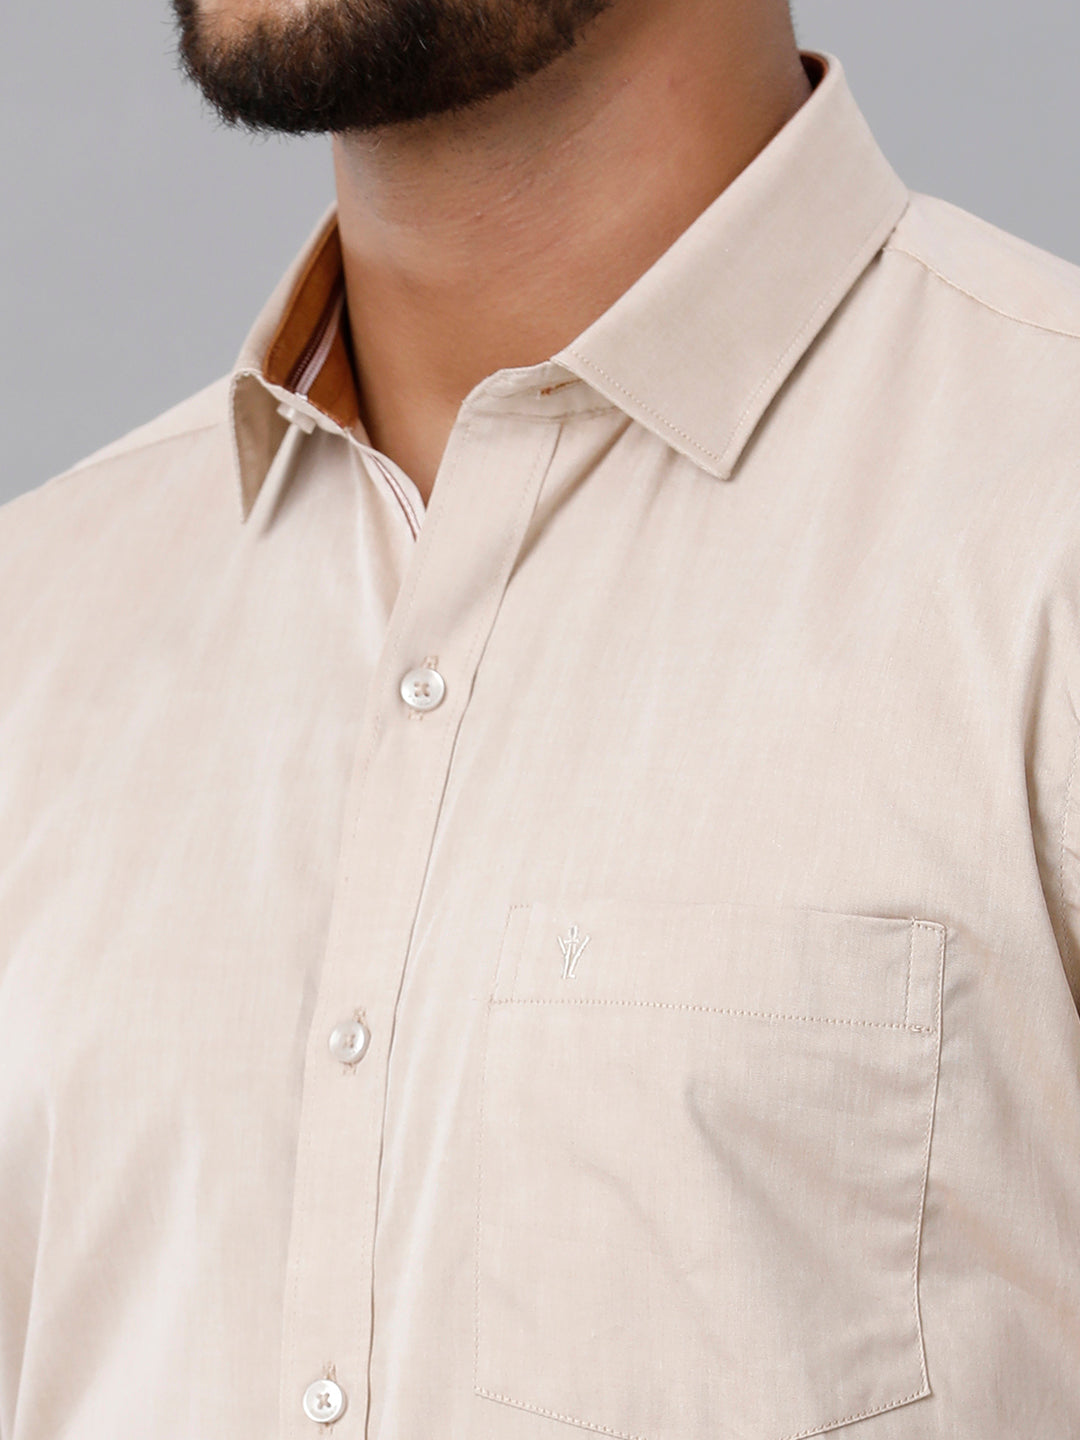 Mens Premium Cotton Formal Shirt Half Sleeves Light Brown MH G113-Zoom view